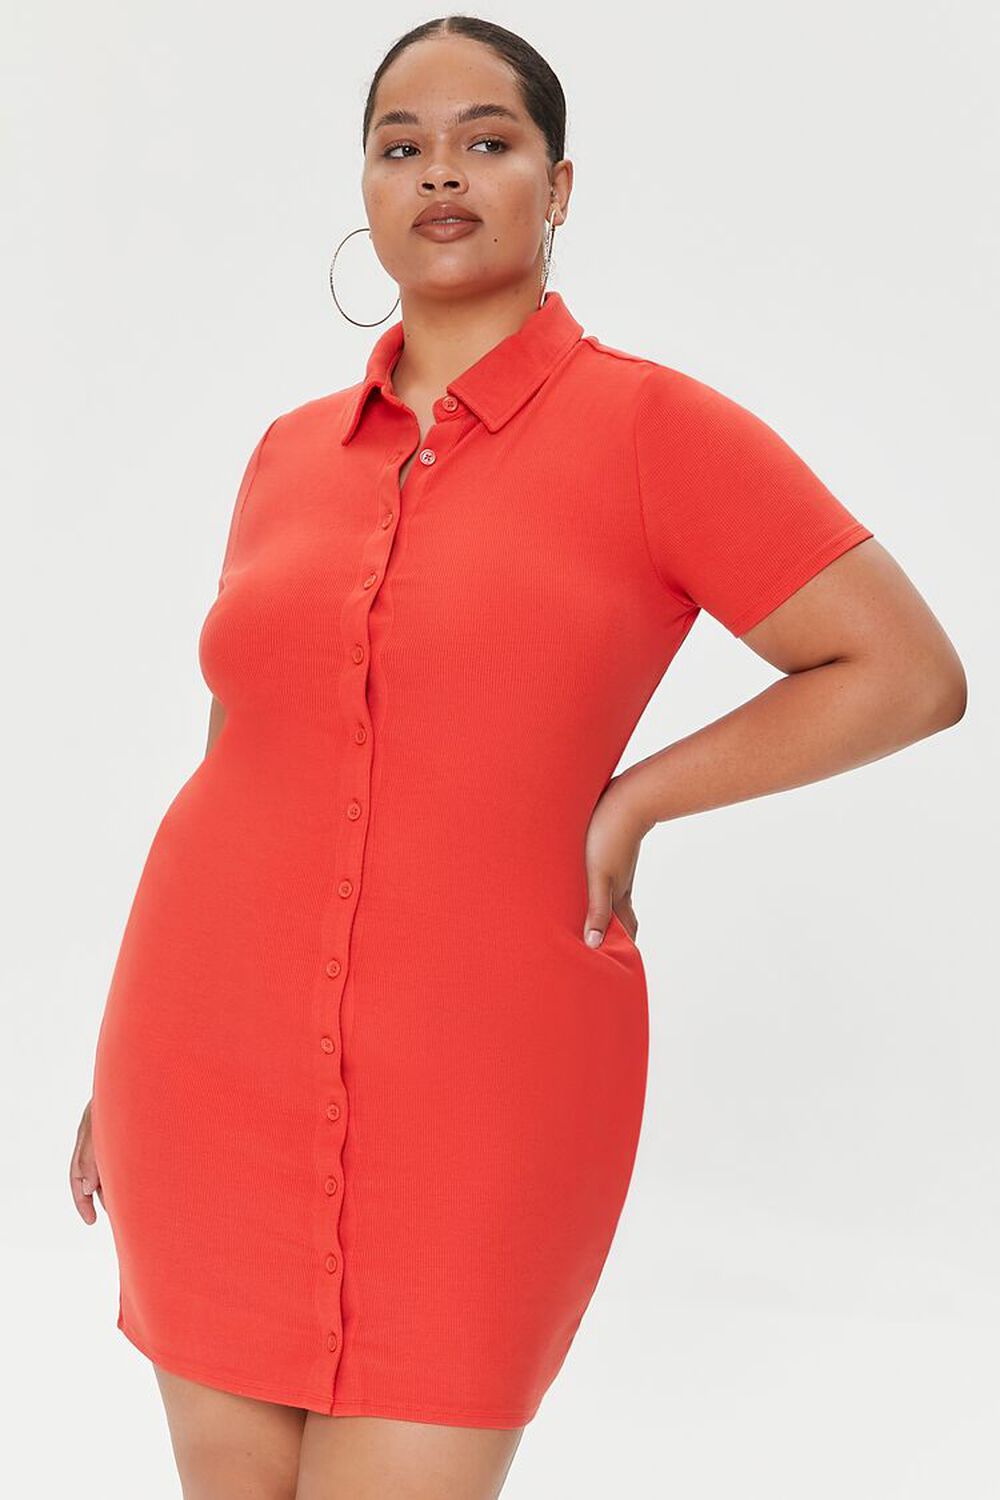 POMPEIAN RED  Plus Size Ribbed Shirt Dress, image 1